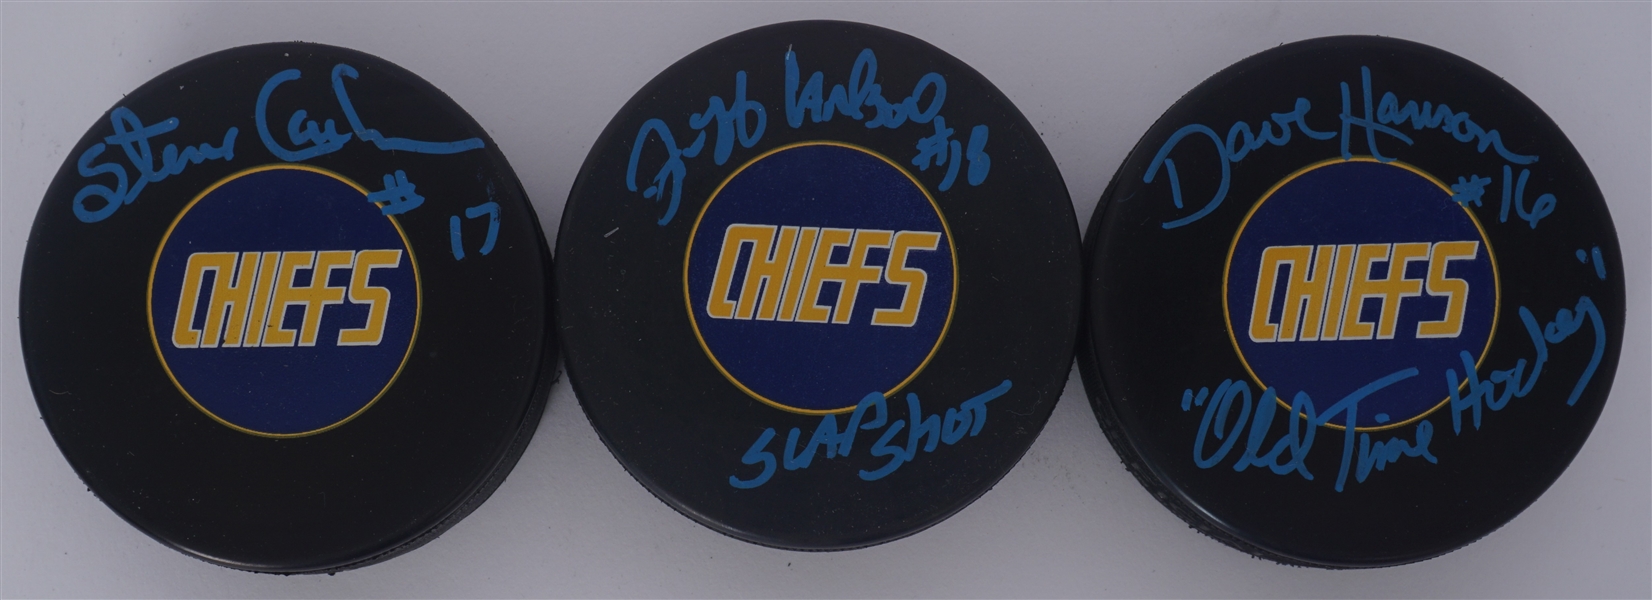 Lot of 3 "Slap Shot" Autographed Hockey Pucks Beckett